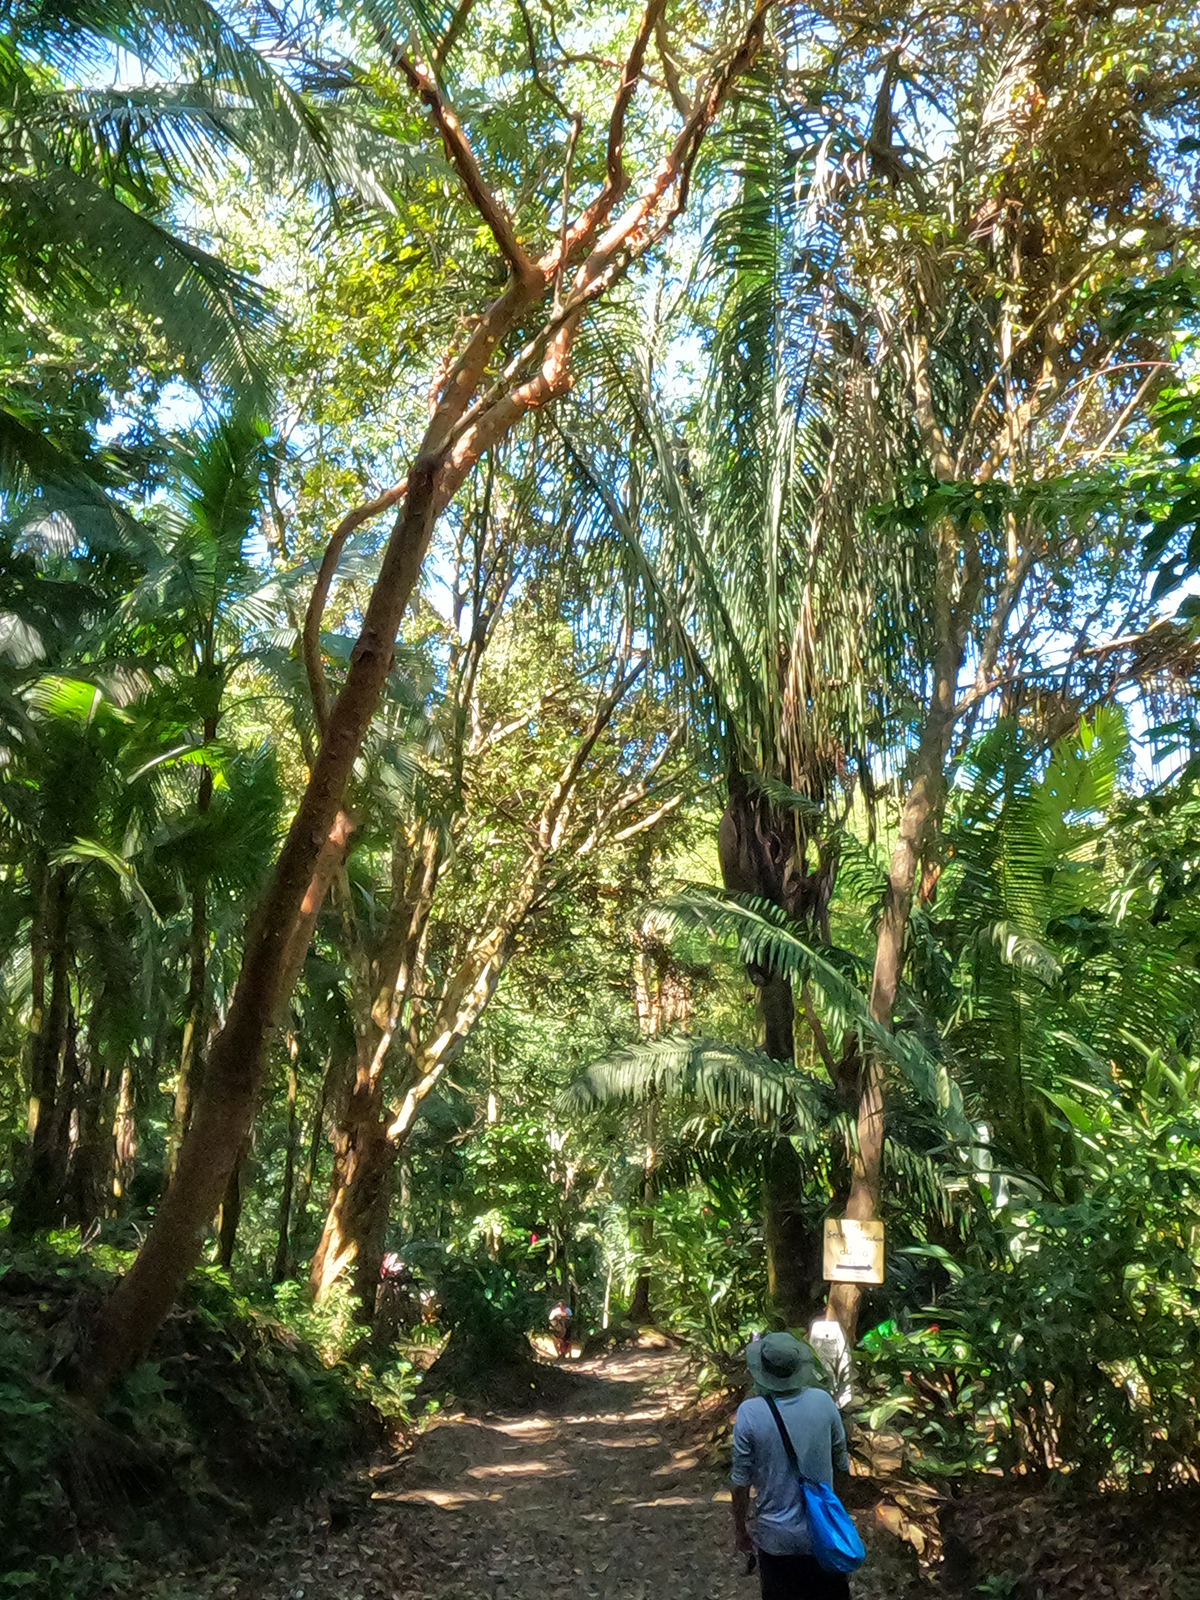 palm tree lined path through jungle